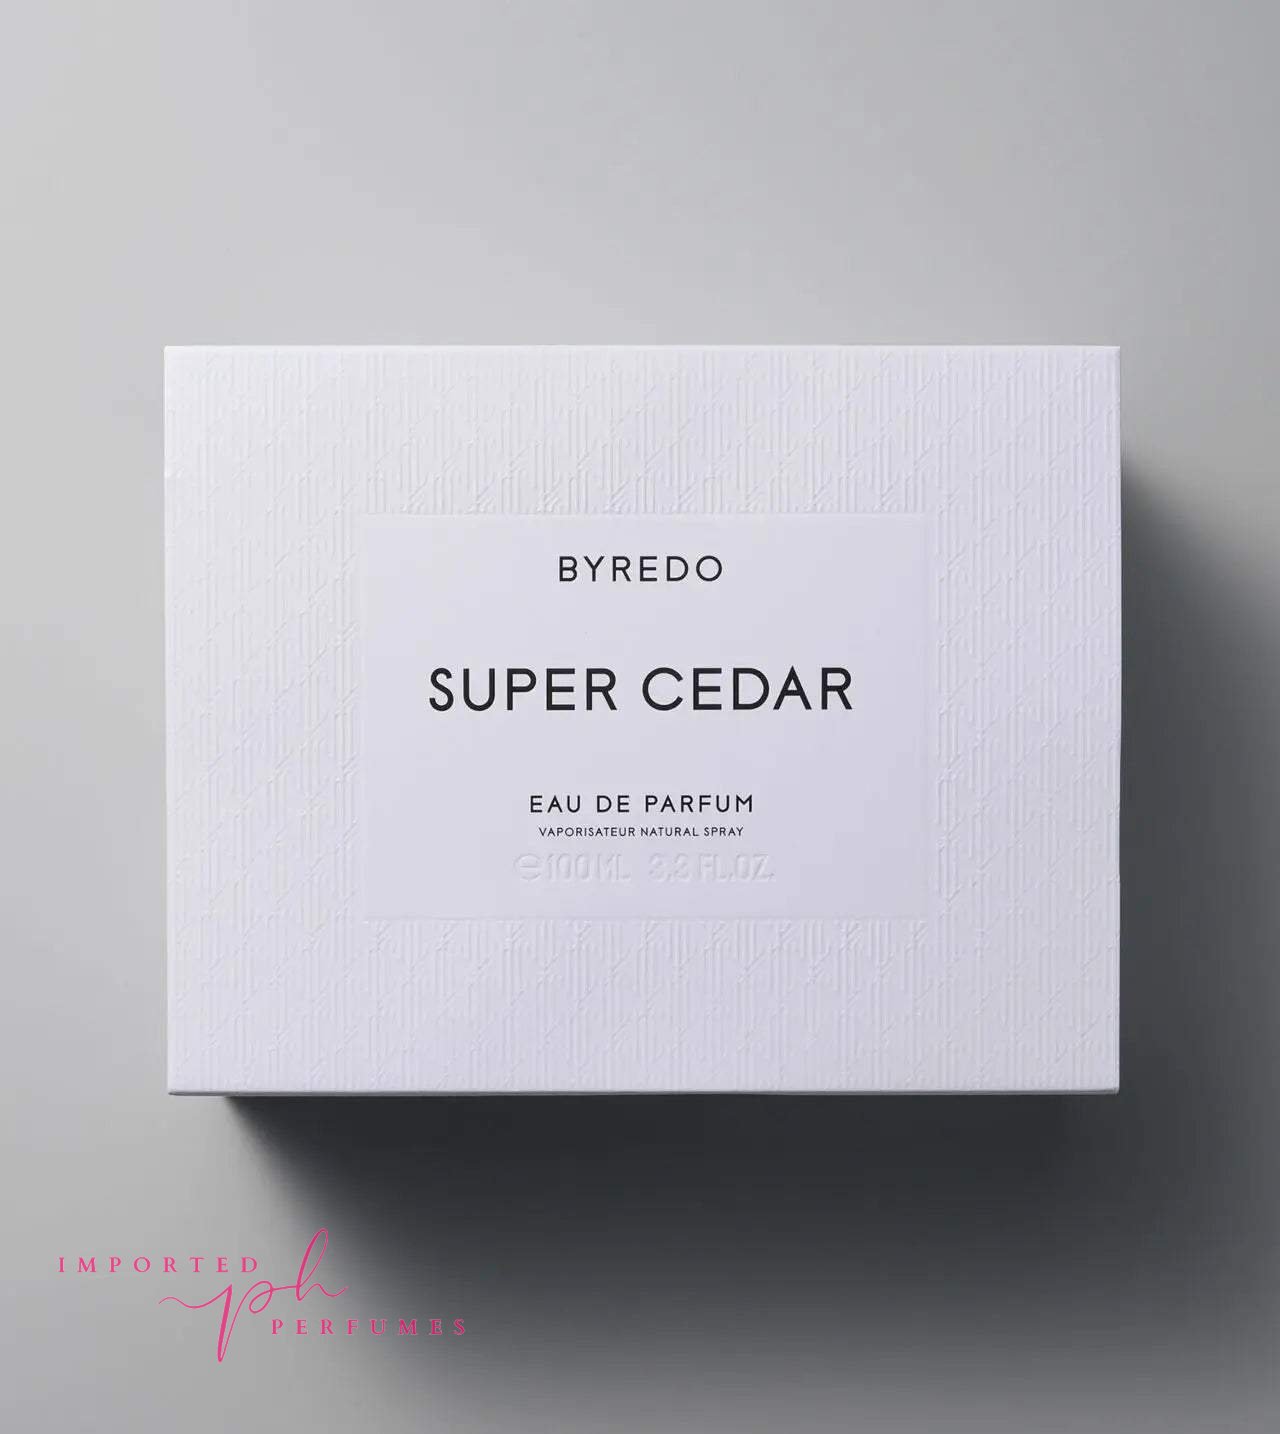 Byredo Super Cedar By Byredo For Men Eau De Parfum 100ml-Imported Perfumes Co-Byredo,for men,men,men perfume,Super cedar